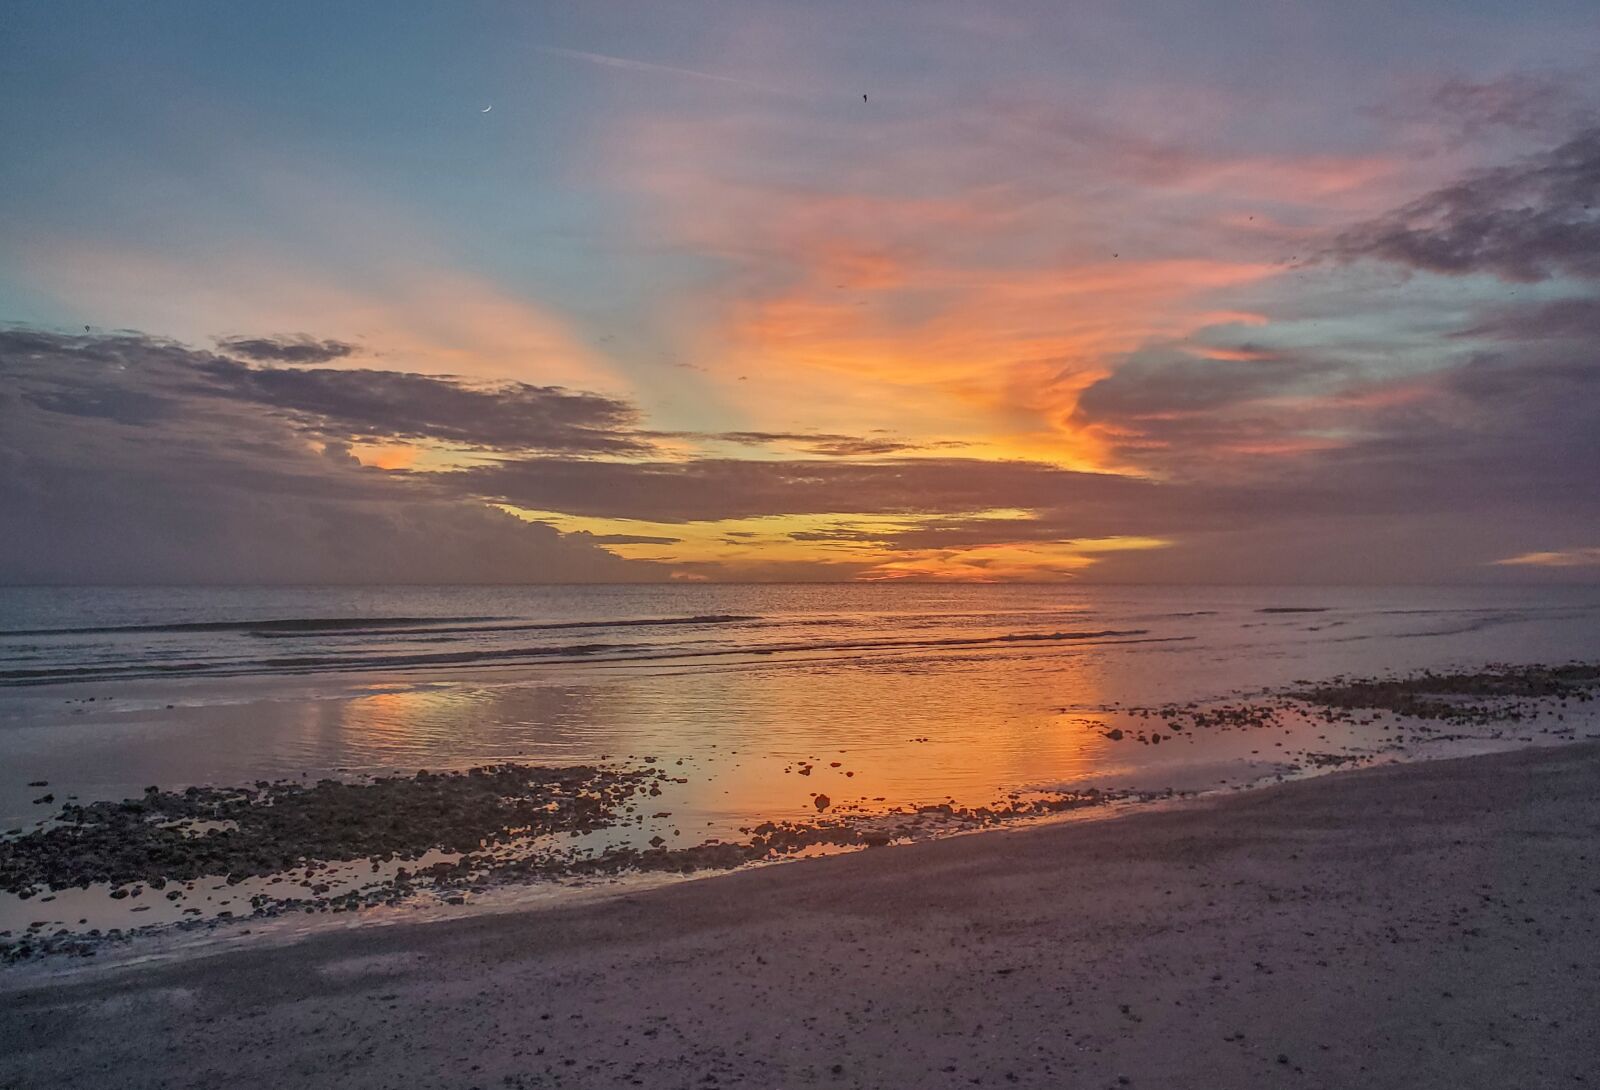 Samsung Galaxy S10 sample photo. Ocean, sunset, beach photography